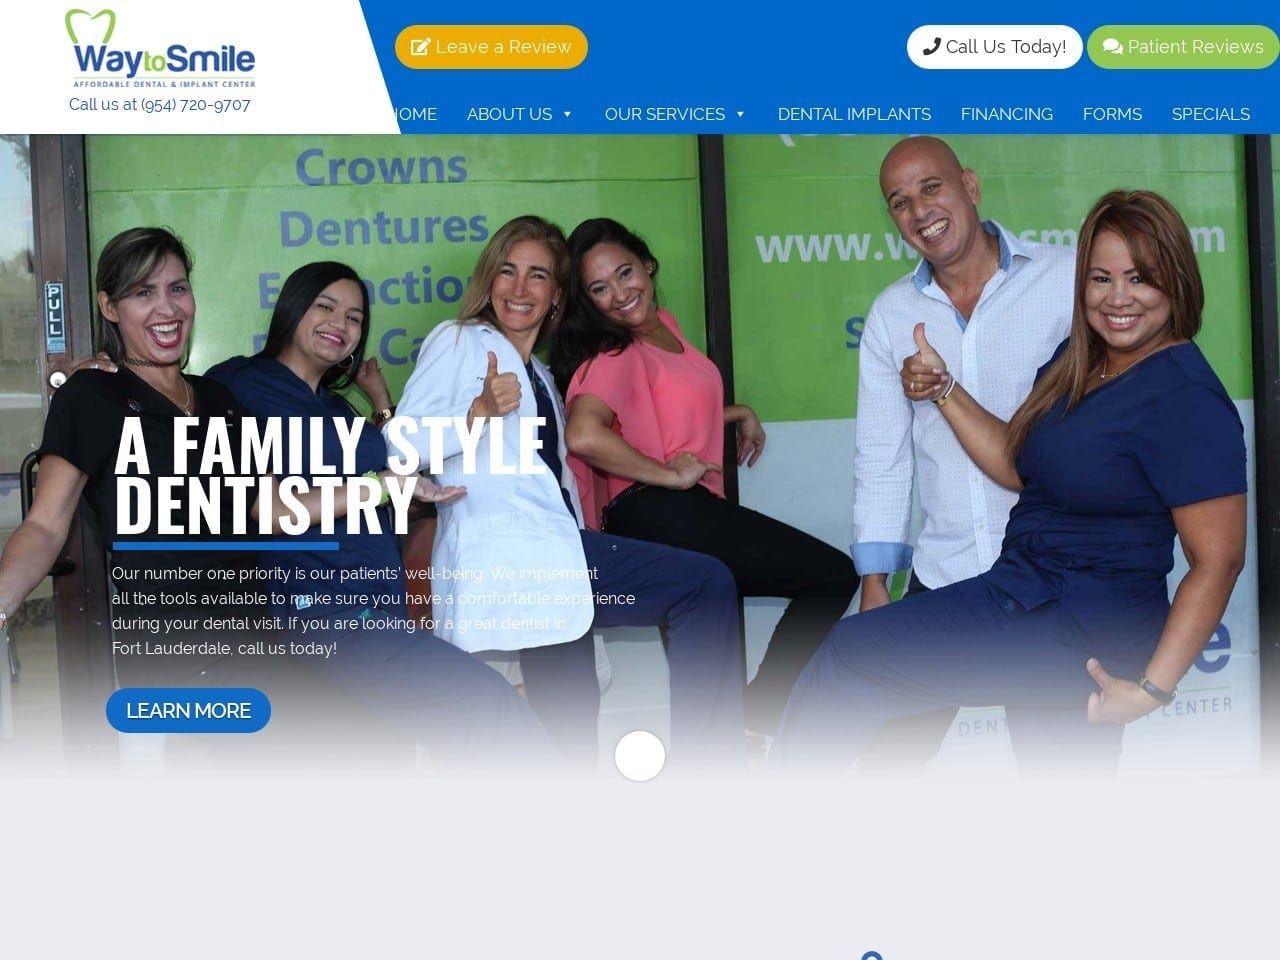 Way To Smile Dental Website Screenshot from waytosmile.com